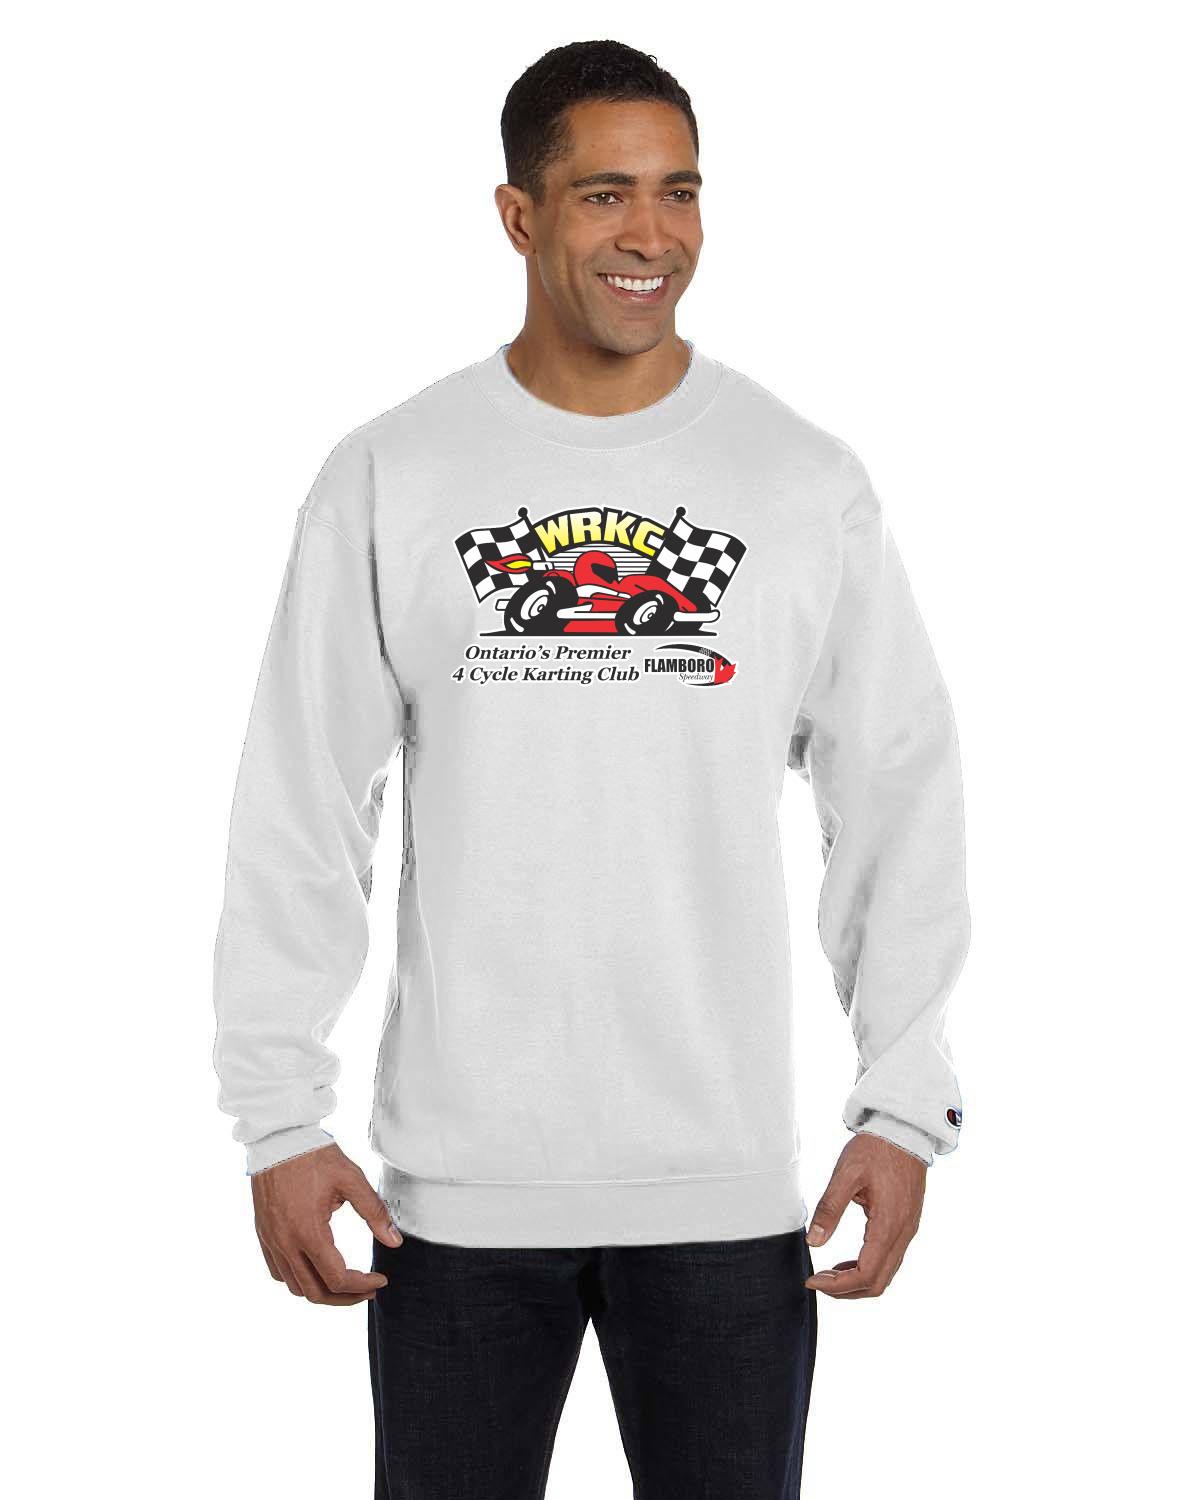 WRKC Karting Club Champion Brand Adult Crew Neck Sweater